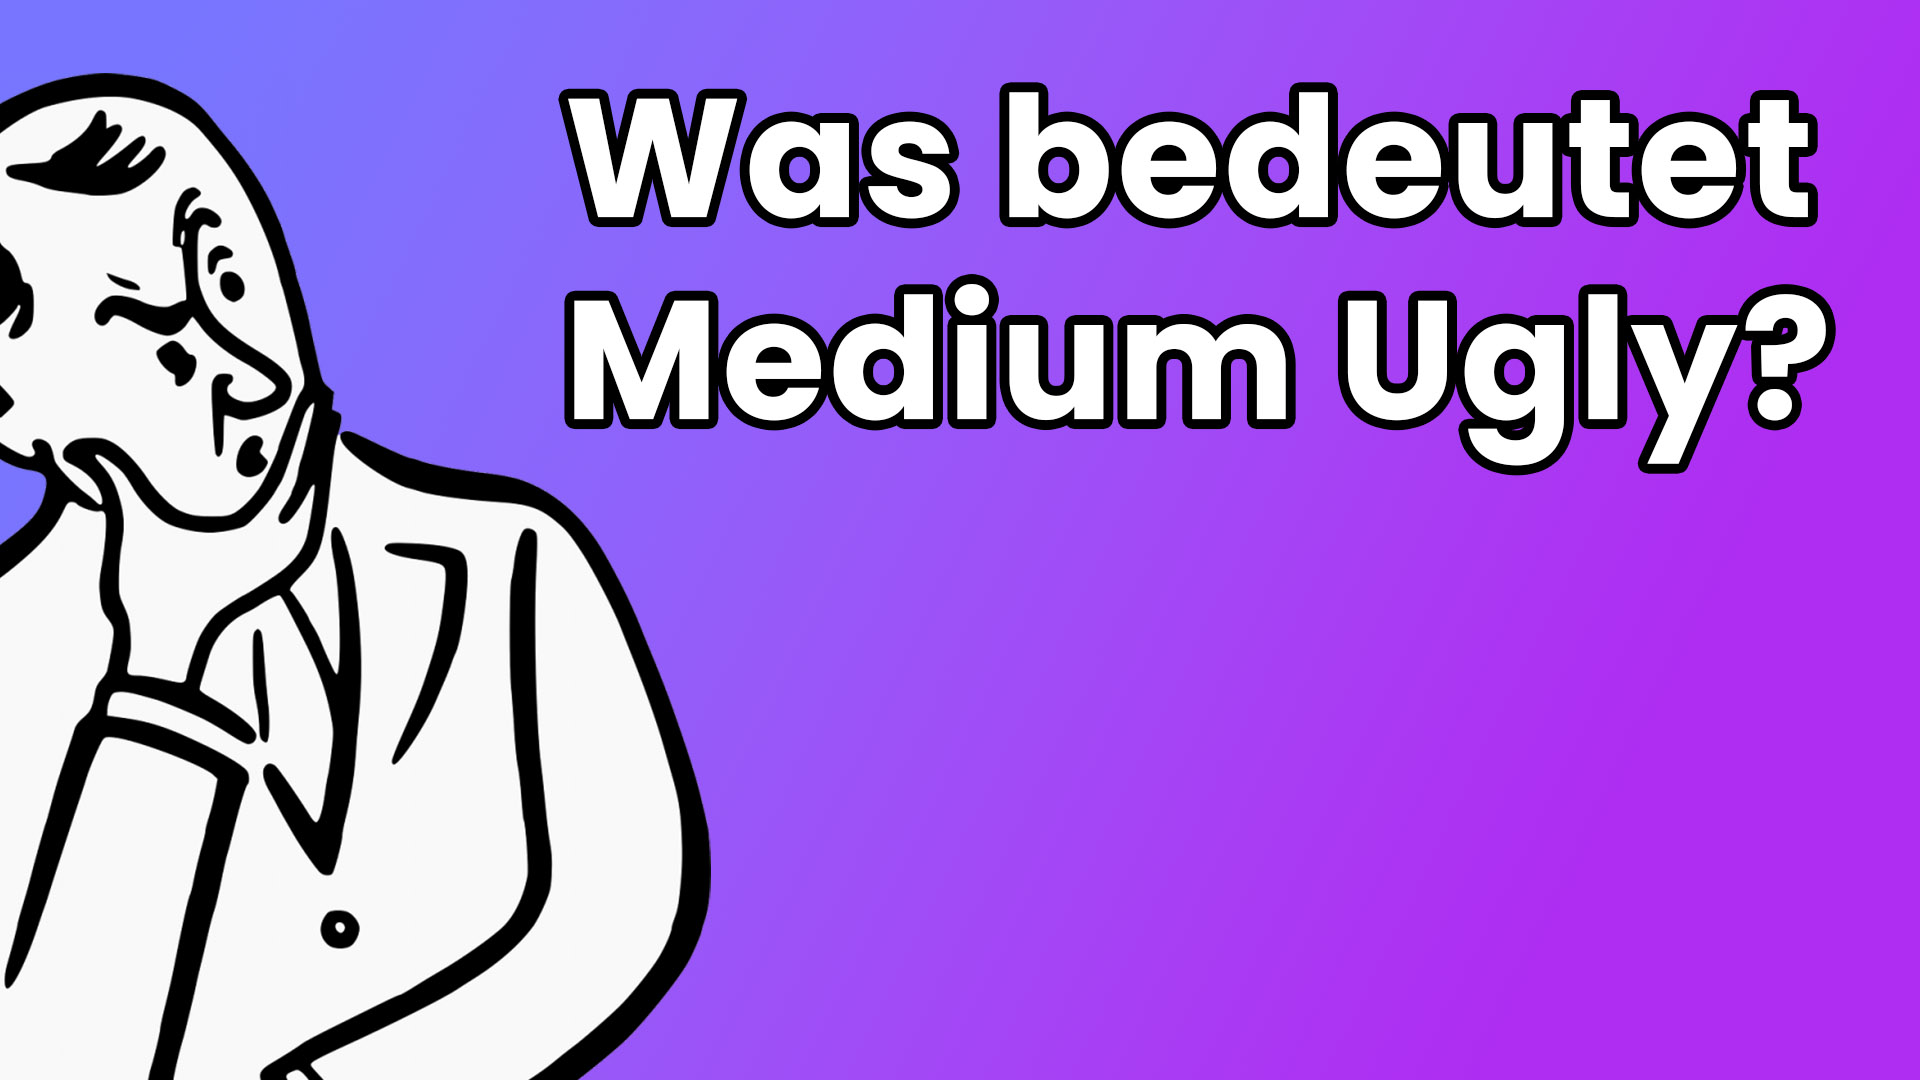 medium ugly bedeutung